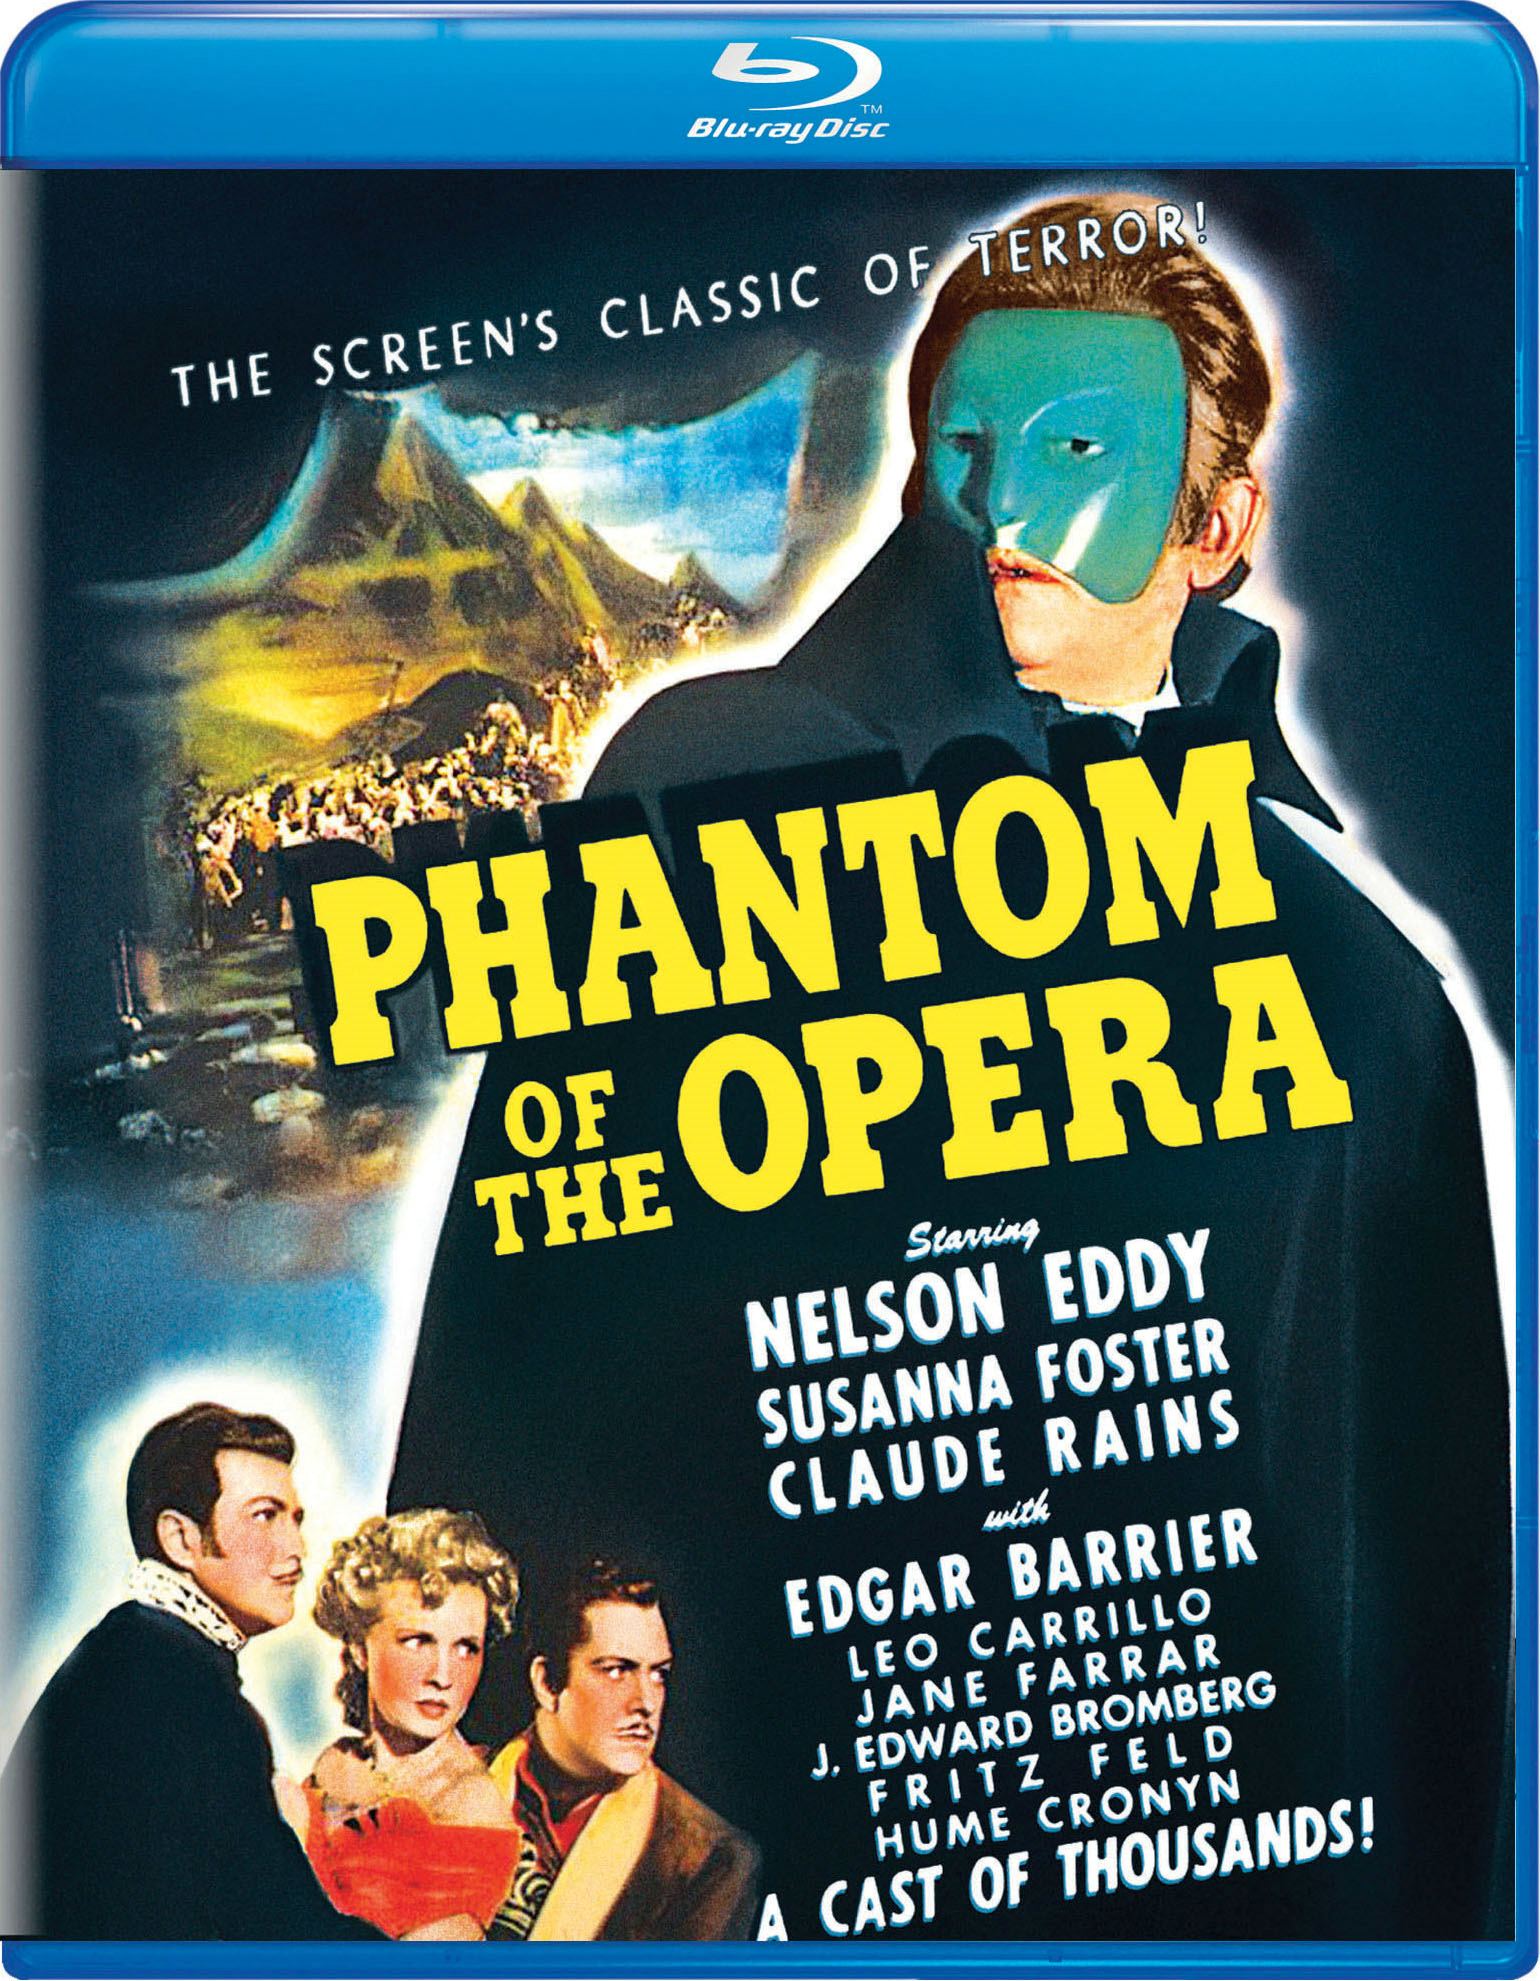 The Phantom Of The Opera - Blu-ray [ 1943 ]  - Classic Movies On Blu-ray - Movies On GRUV